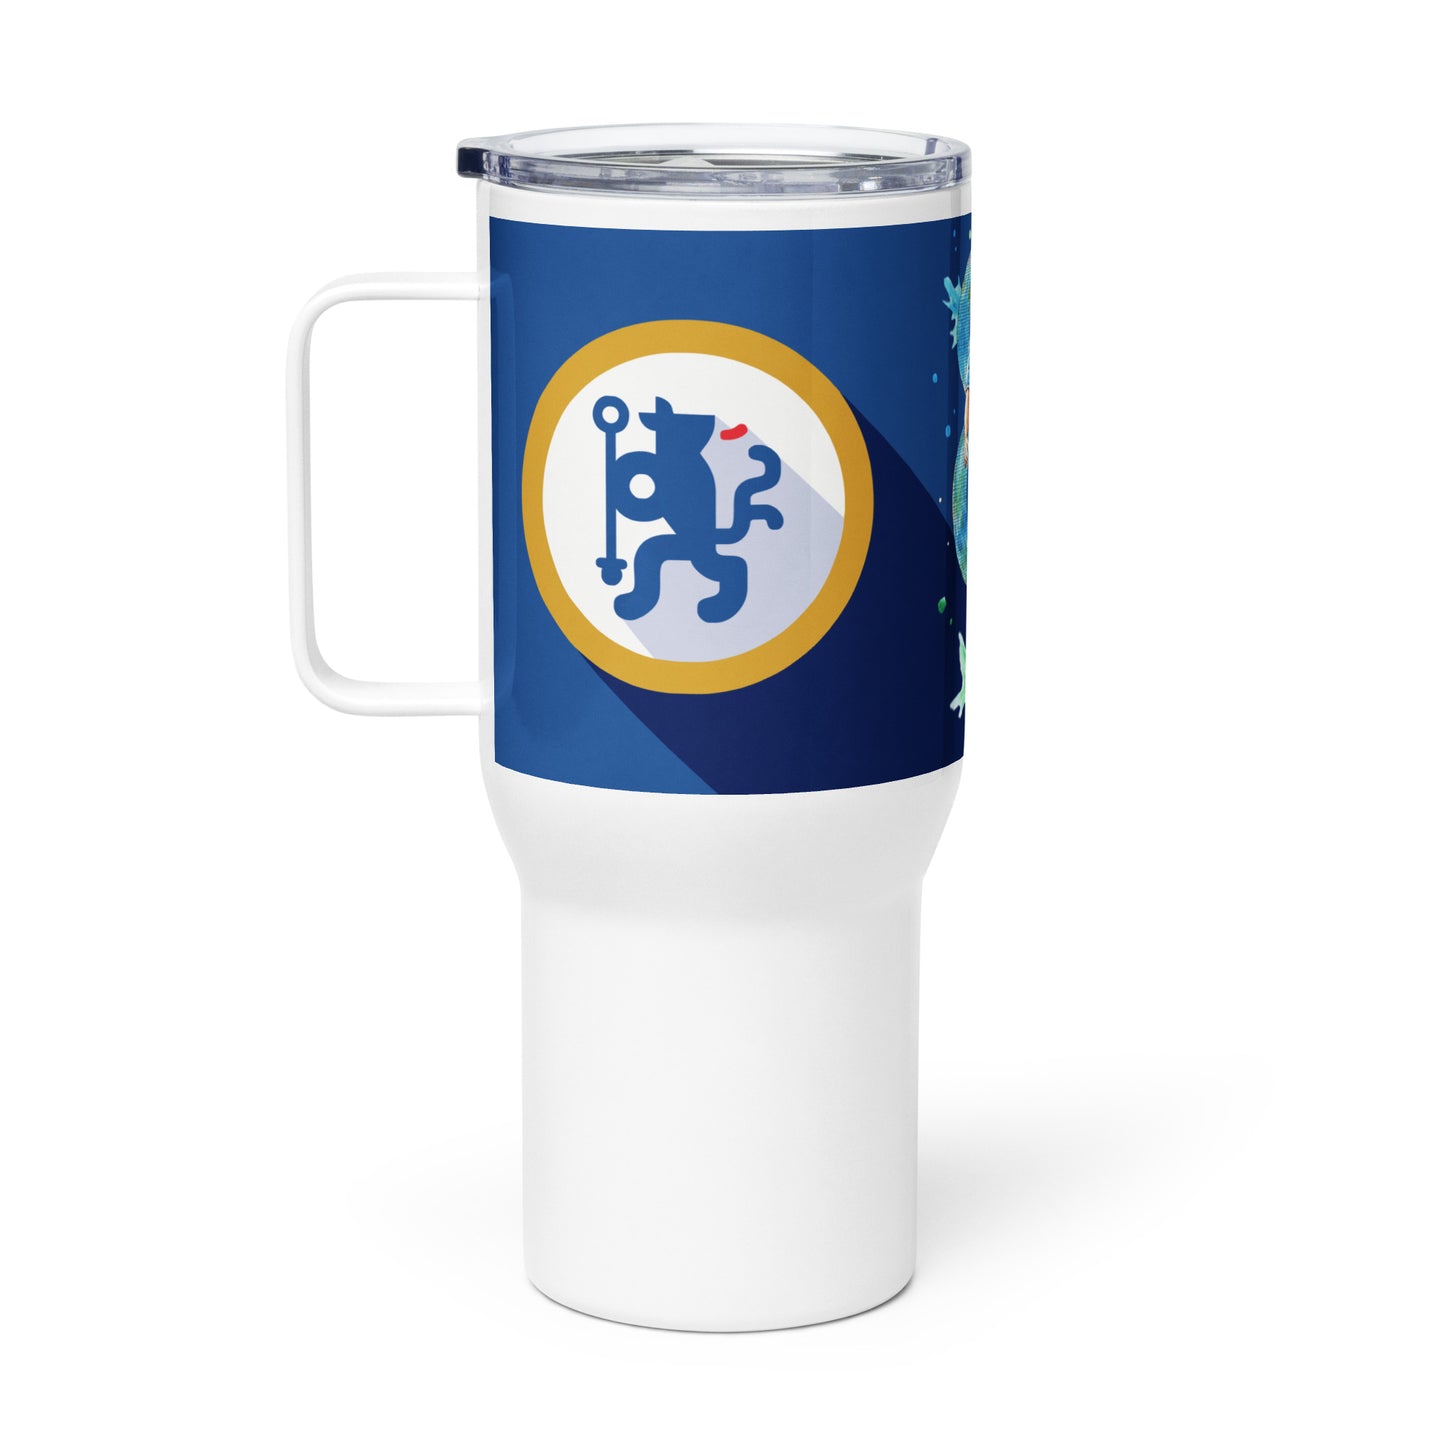 Chelsea Frankie Lampard Vintage Travel mug with a handle